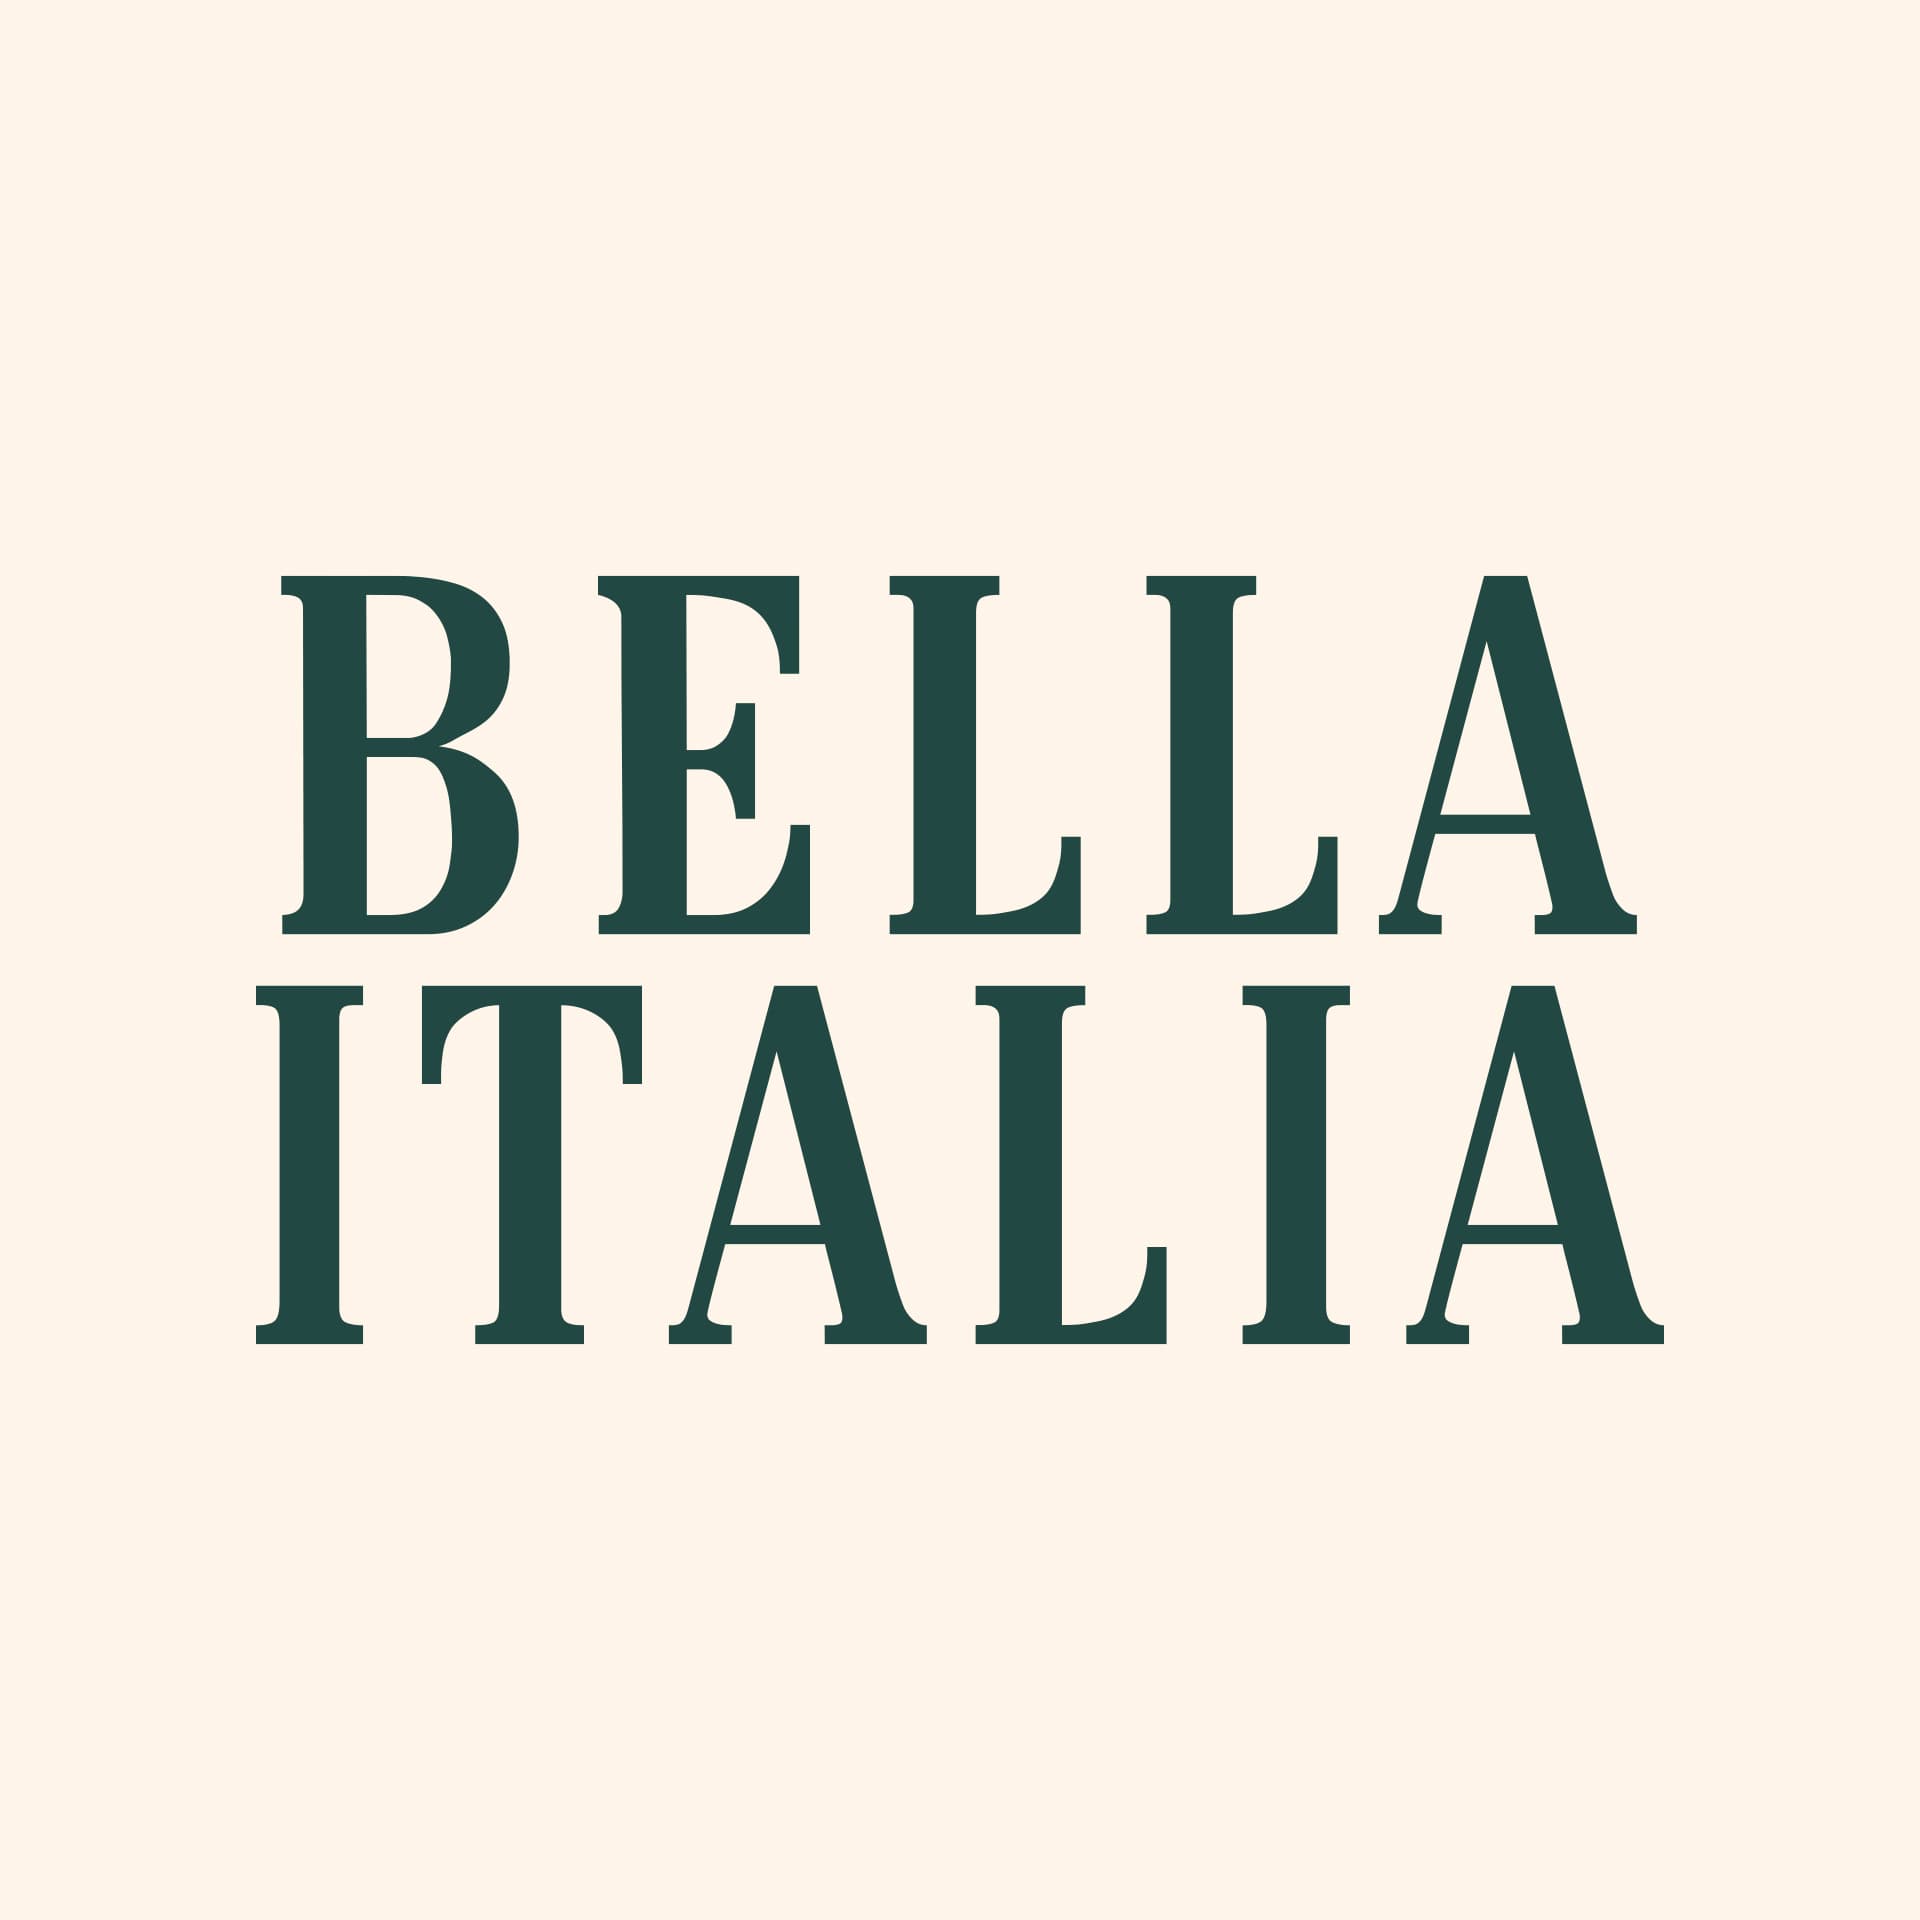 Bella V2 Logo Cream Background